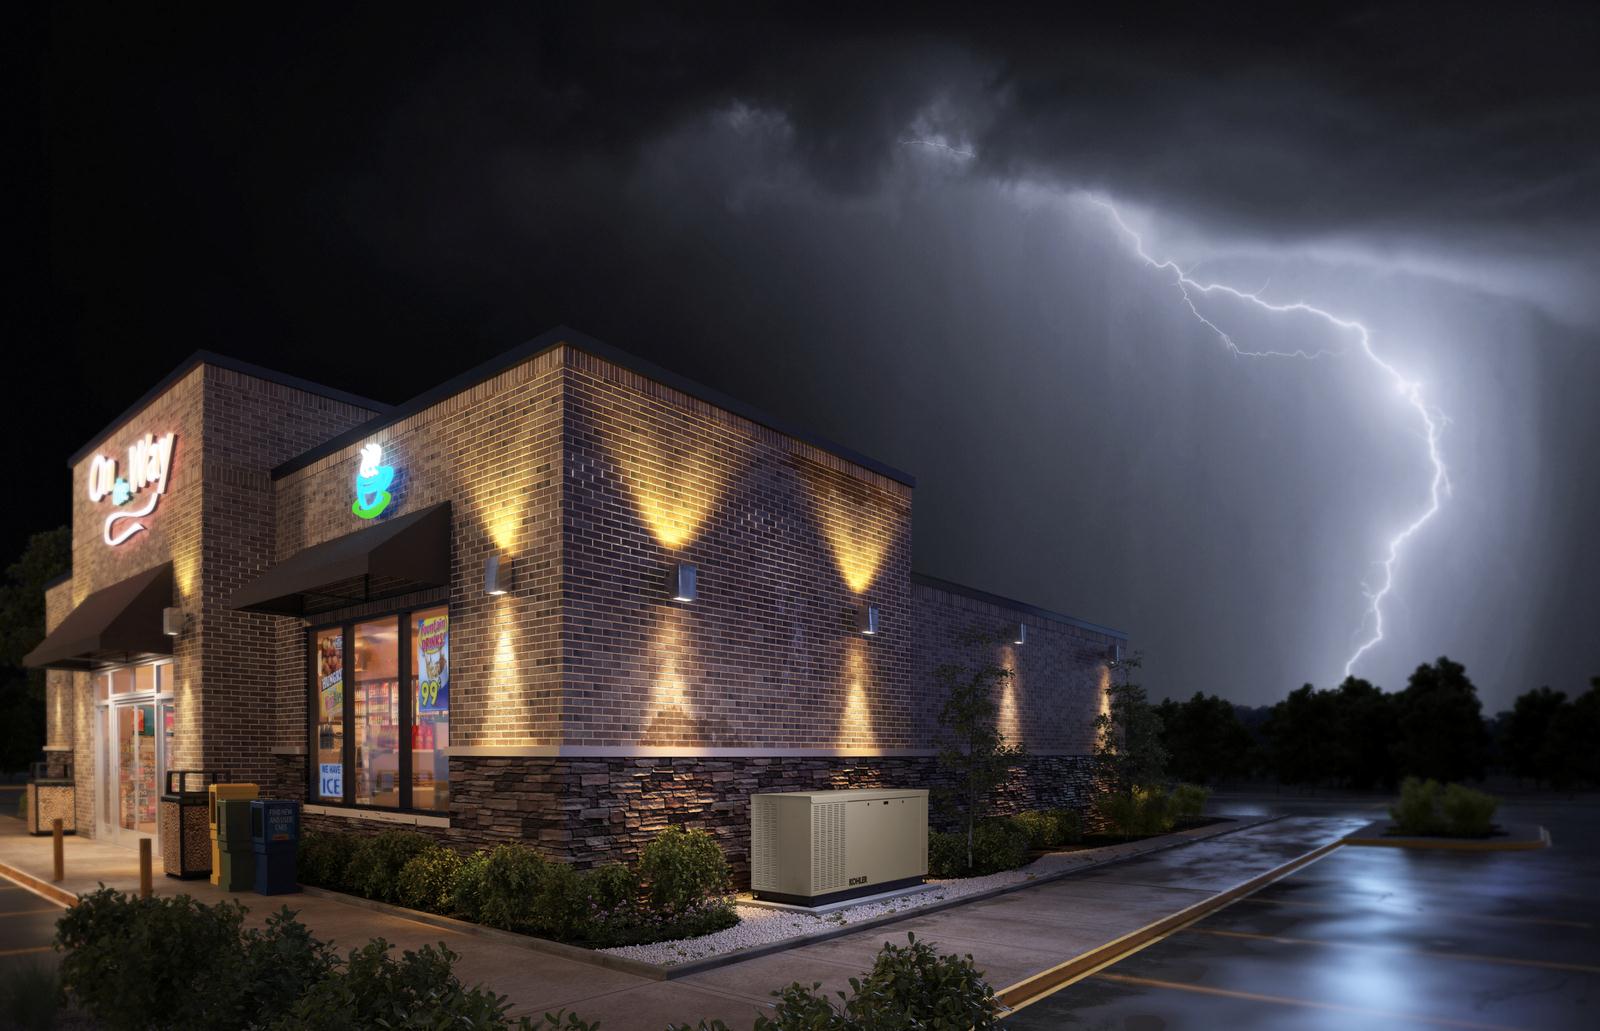 Lightning storm over Office Building